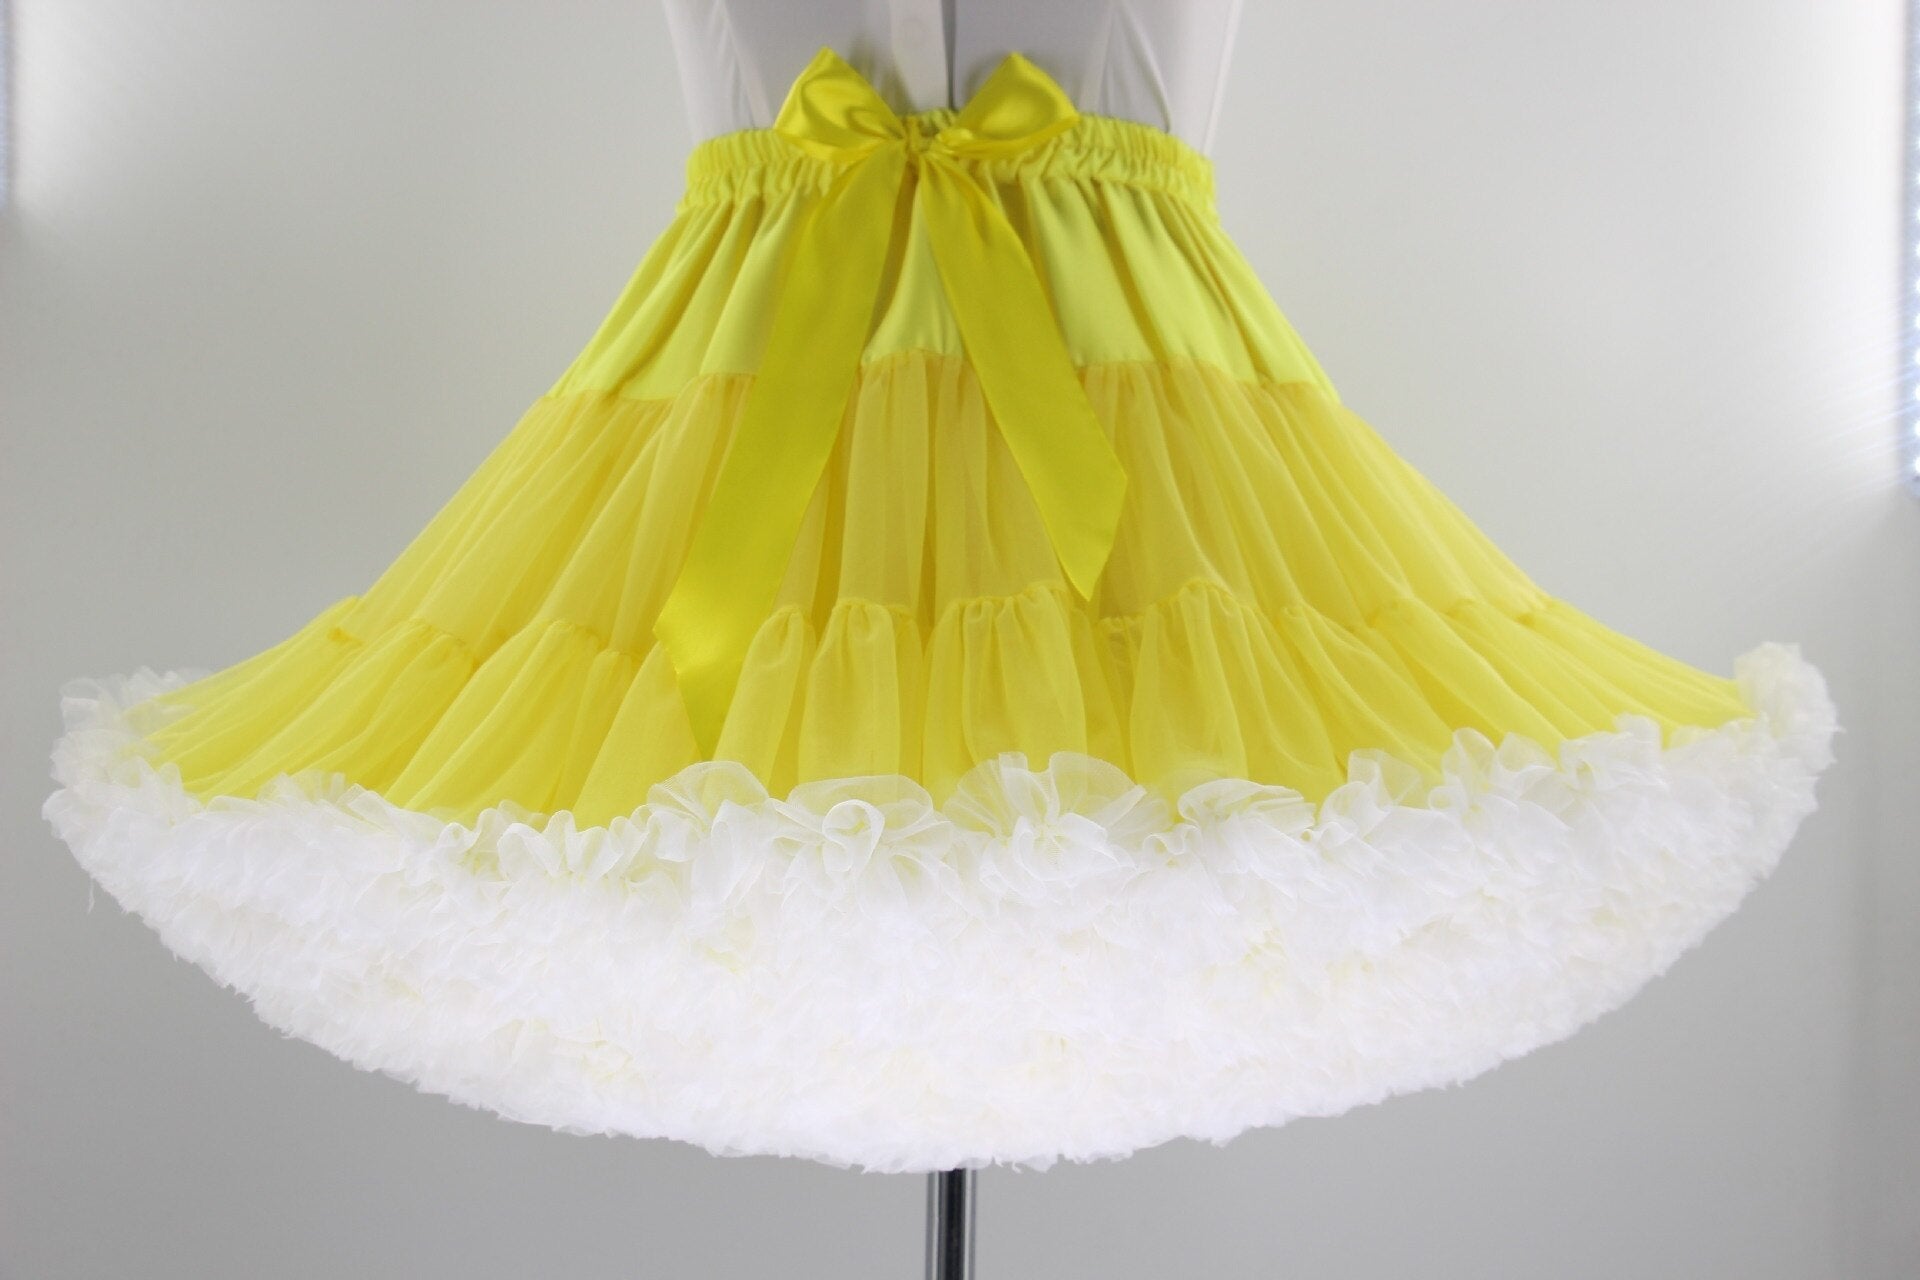 Adult Yellow Tutu Skirt Tulle Skirt Petitcoat